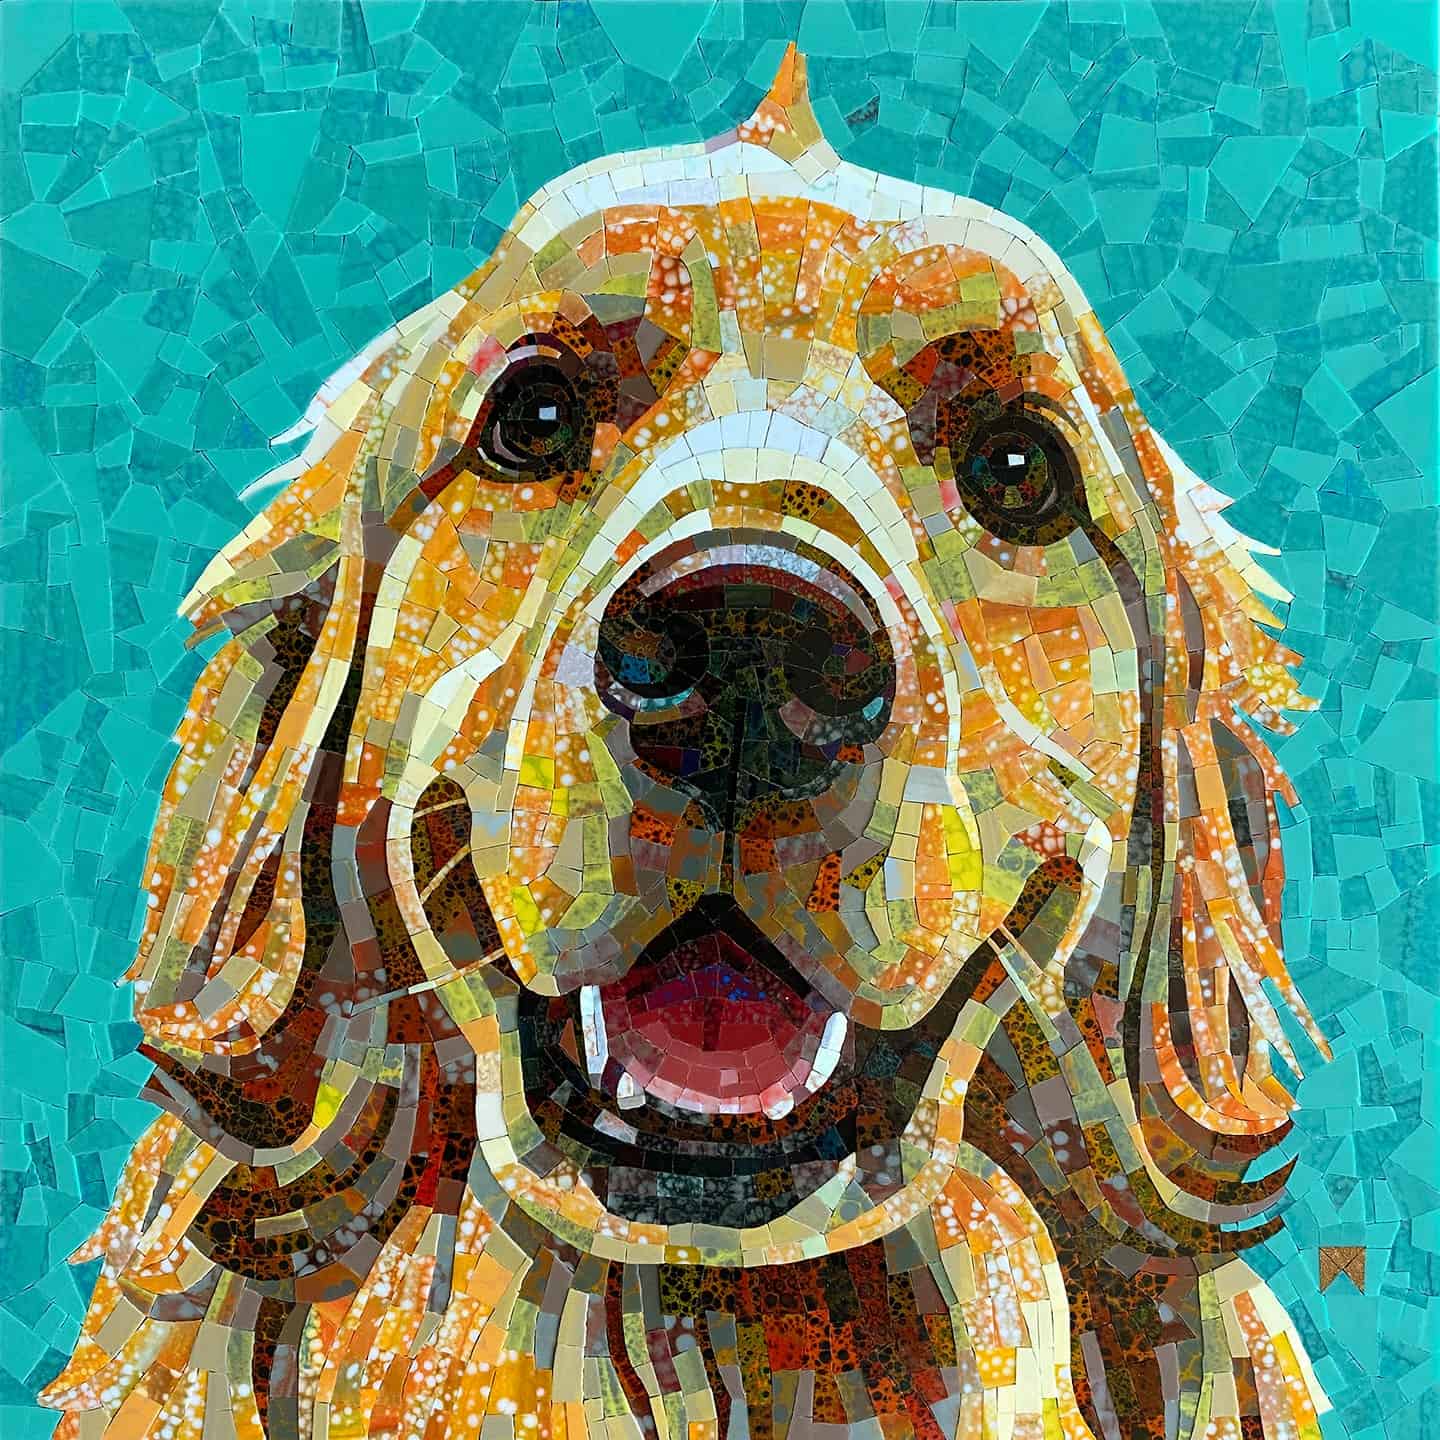 The most famous glass mosaic pet portrait artist, Donna Van Hooser, did this artwork. 